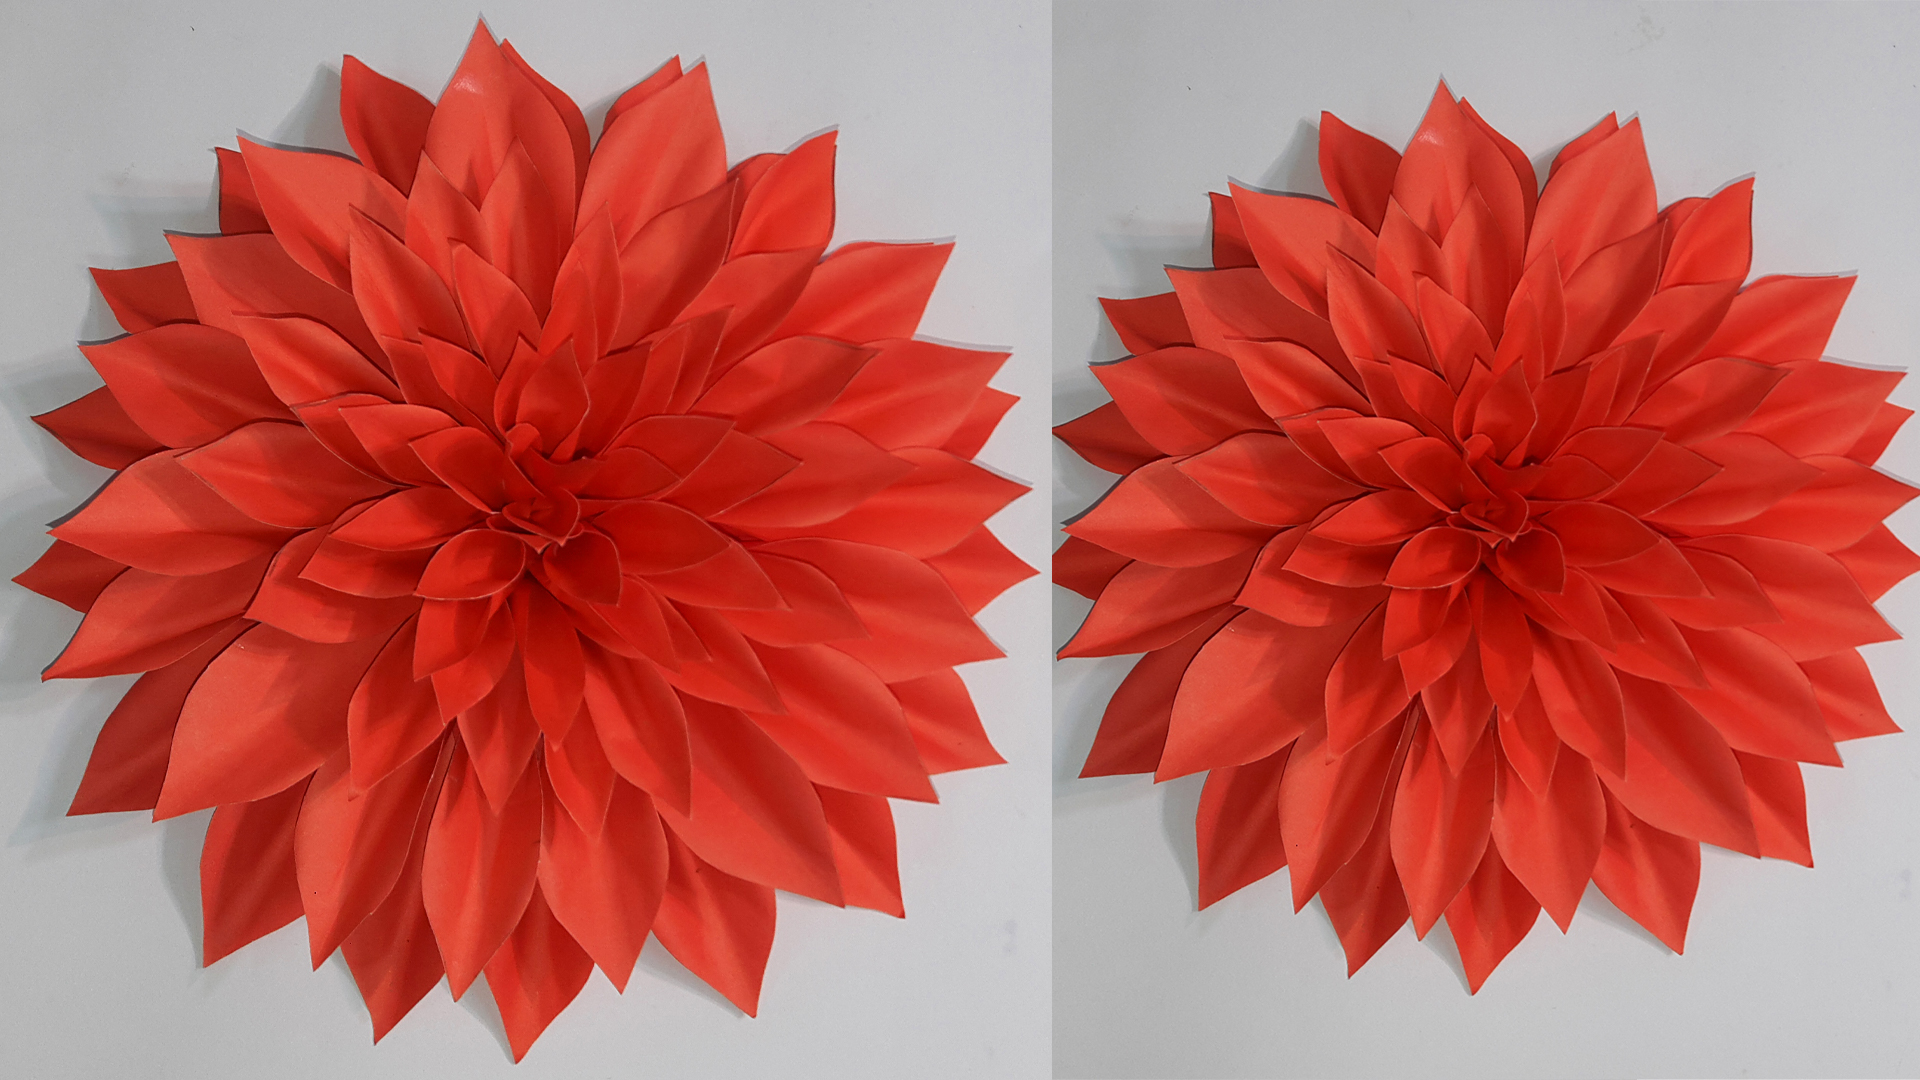 Easy to Make Handmade Paper Flowers